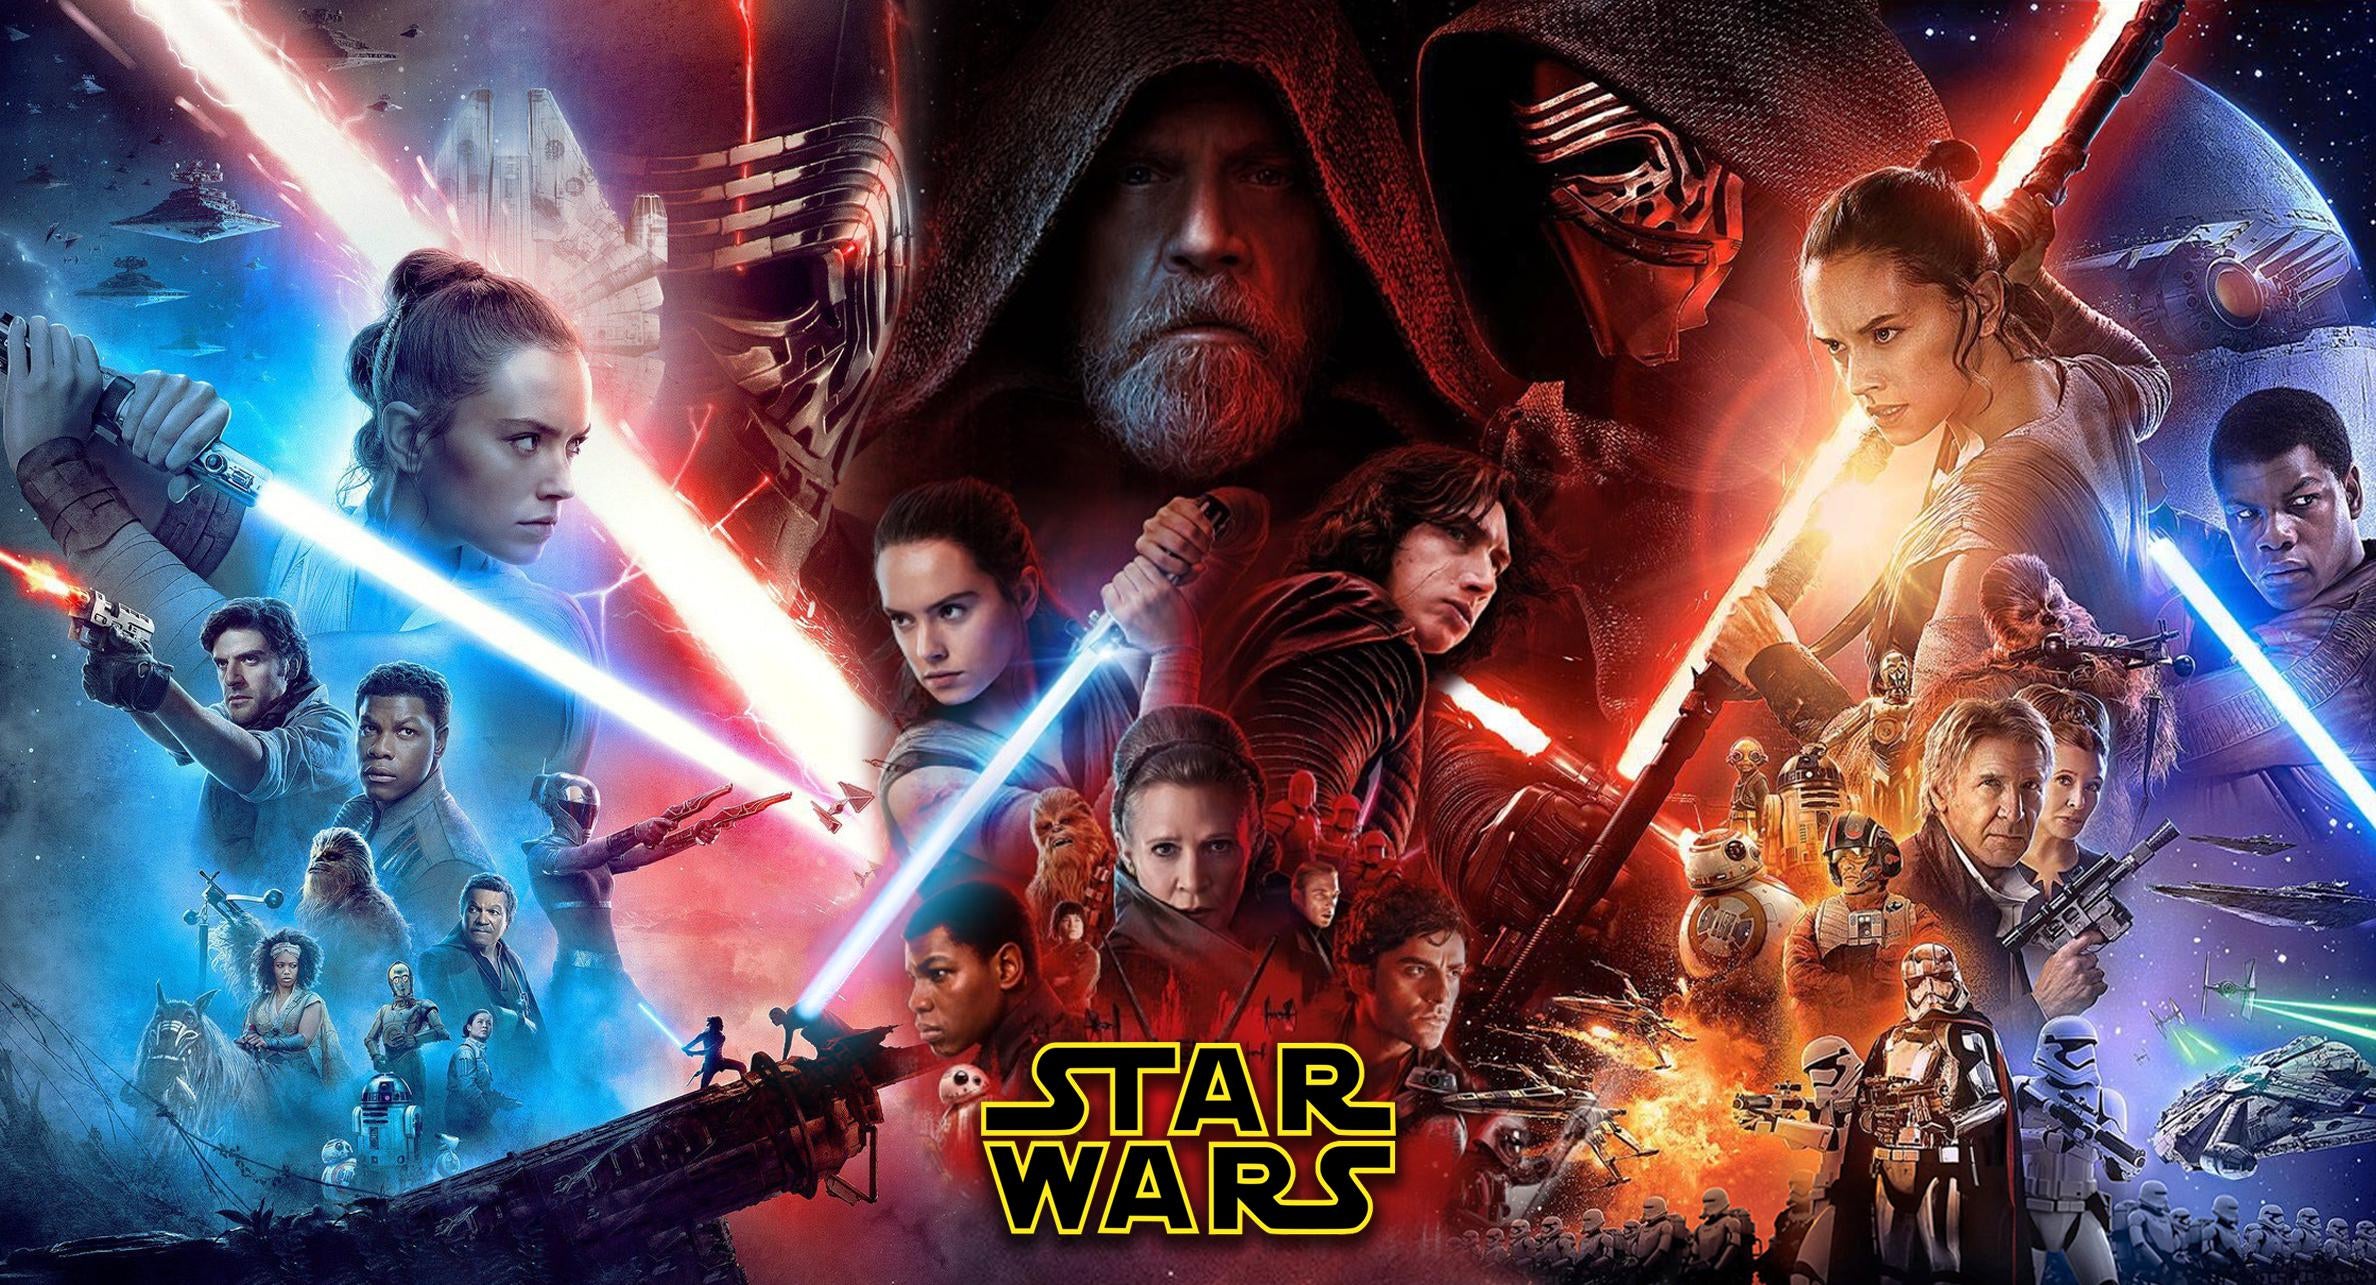 Star Wars Star Wars Episode Vii The Force Awakens Star Wars The Last Jedi Star Wars The Rise Of Skyw 2376x1285